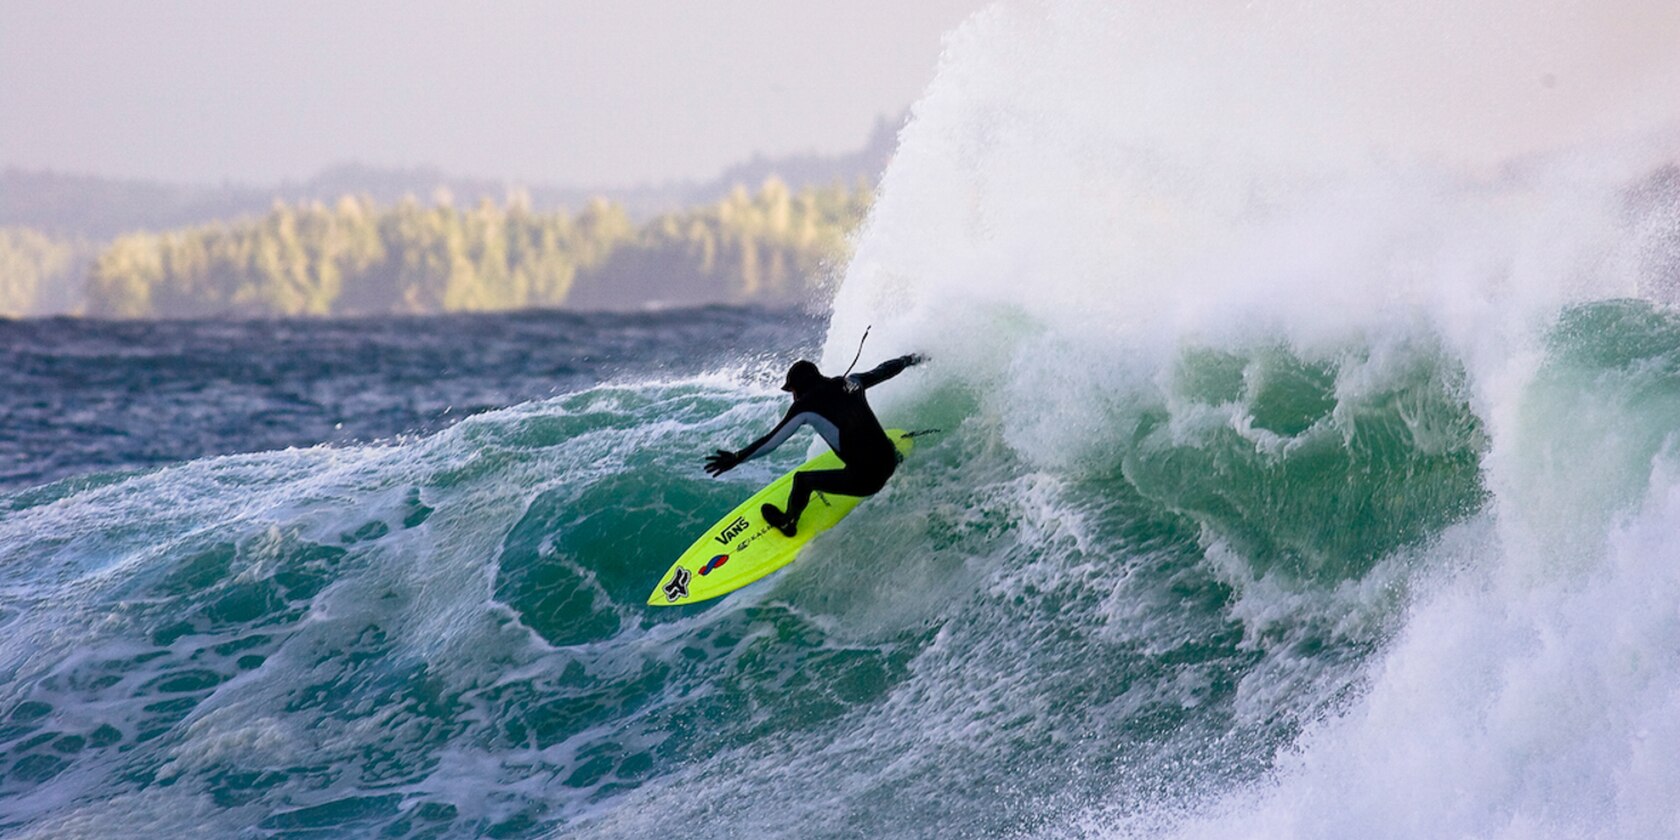 surfer riding large wave